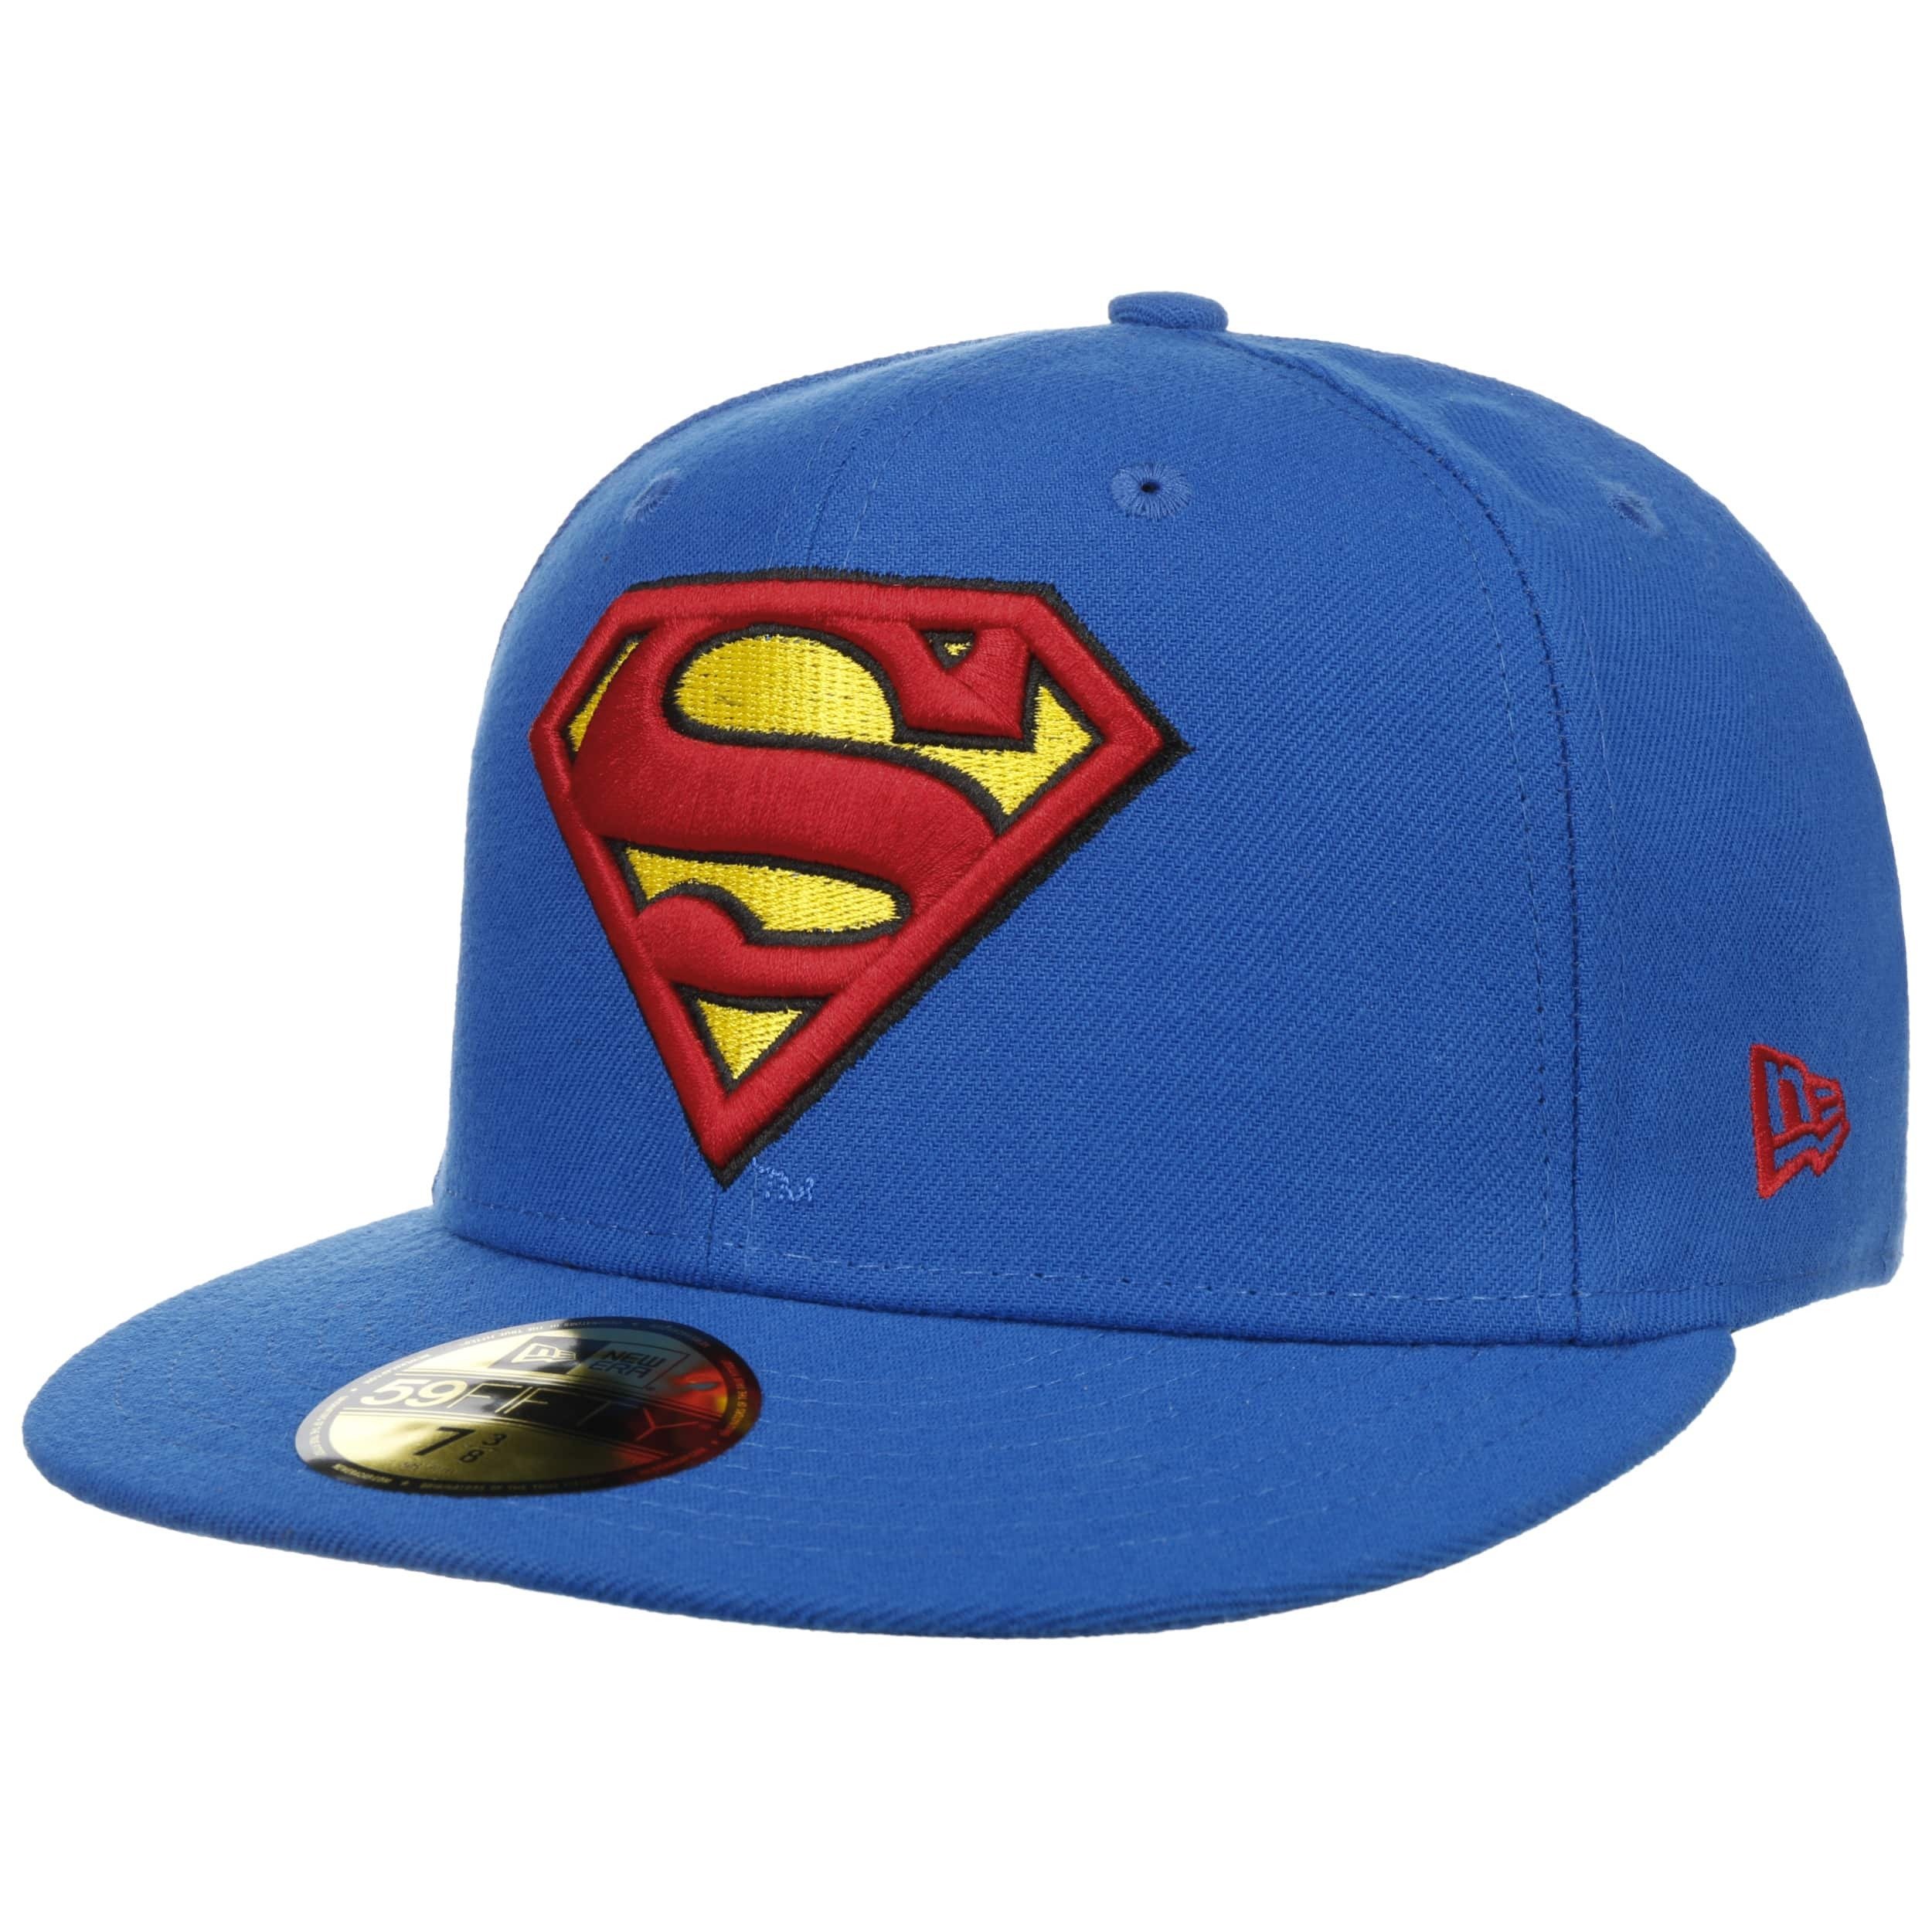 59Fifty Superman Blue Cap by New Era, EUR 34,95 --> Hats, caps ...